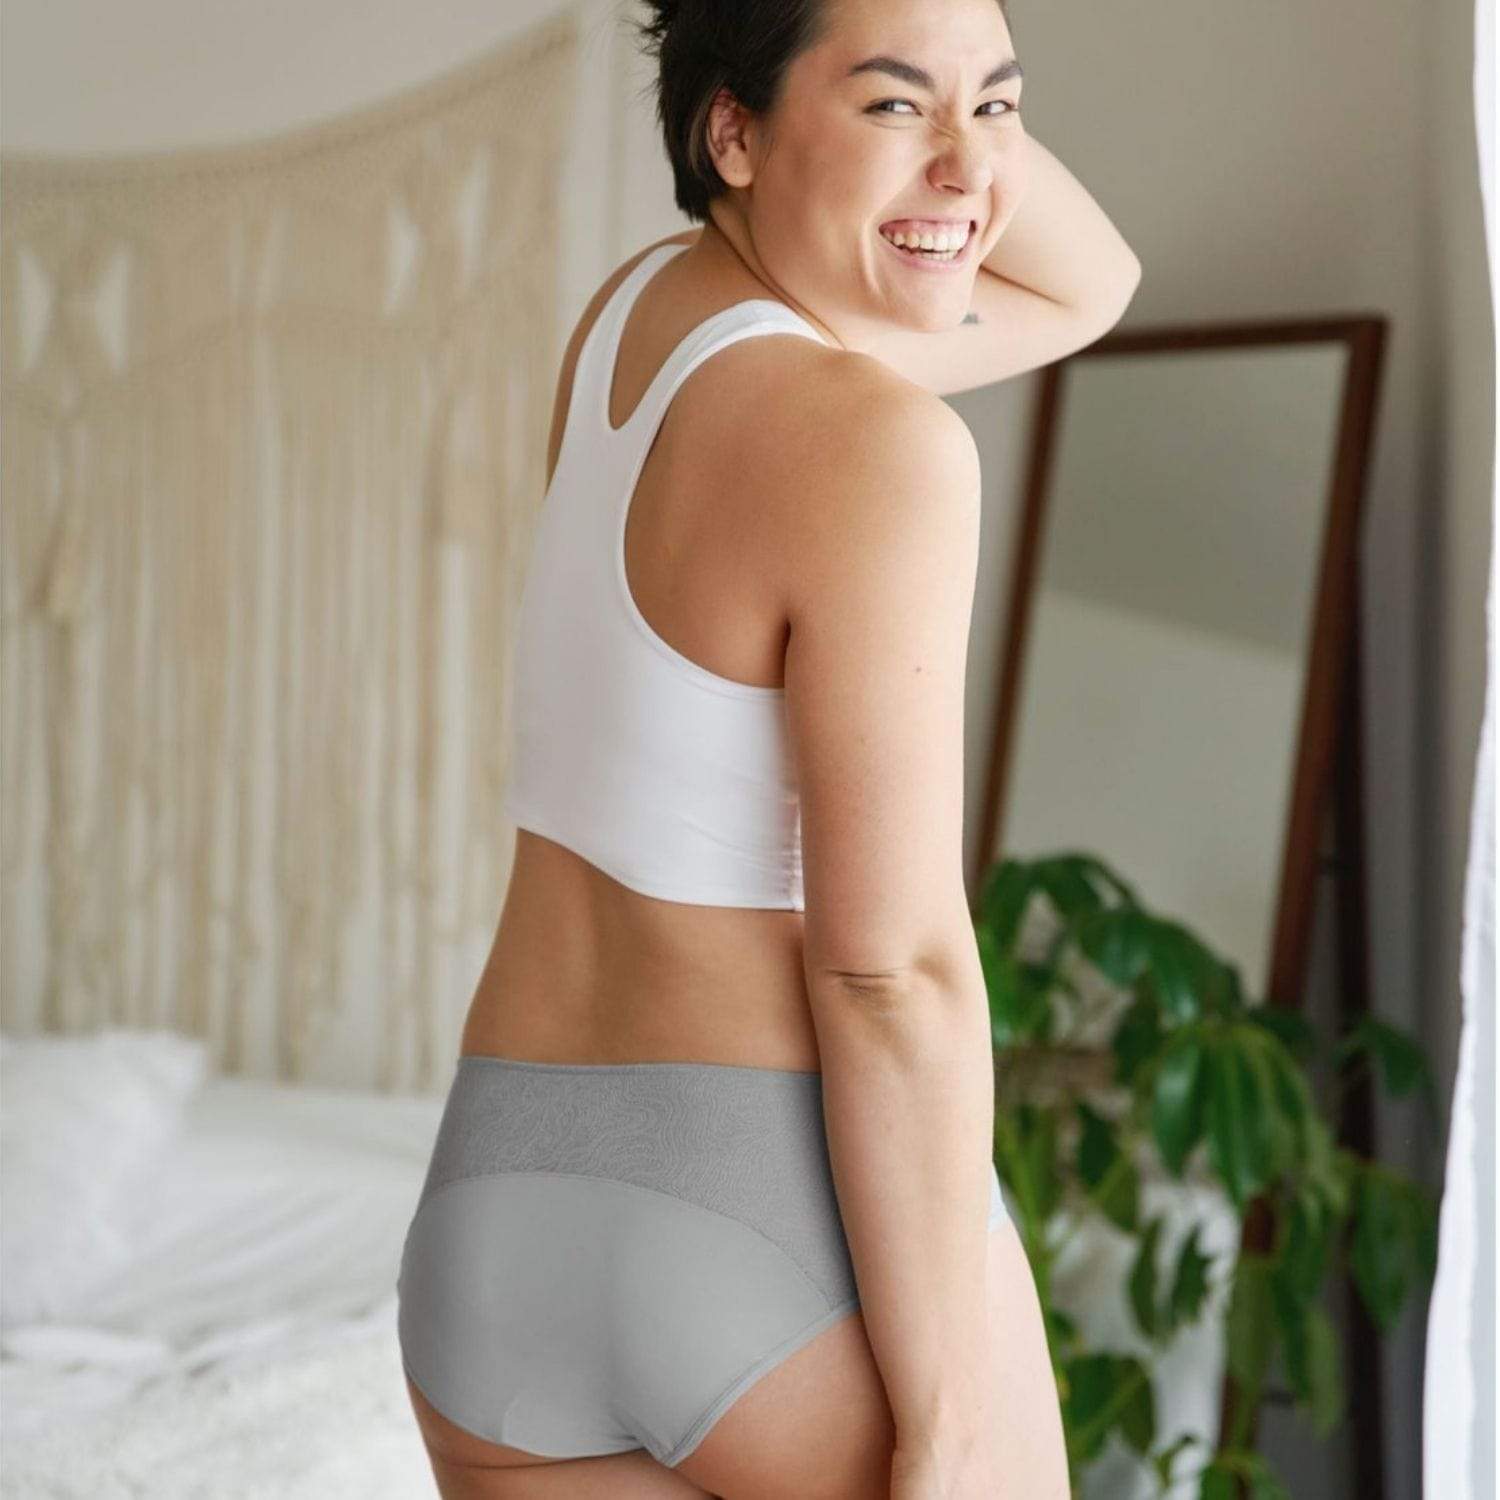 Saalt Reusable Period Underwear - Comfortable, Thin, and Keeps You Dry from  All Leaks (Cotton Bikini, Medium, Volcanic Black) 